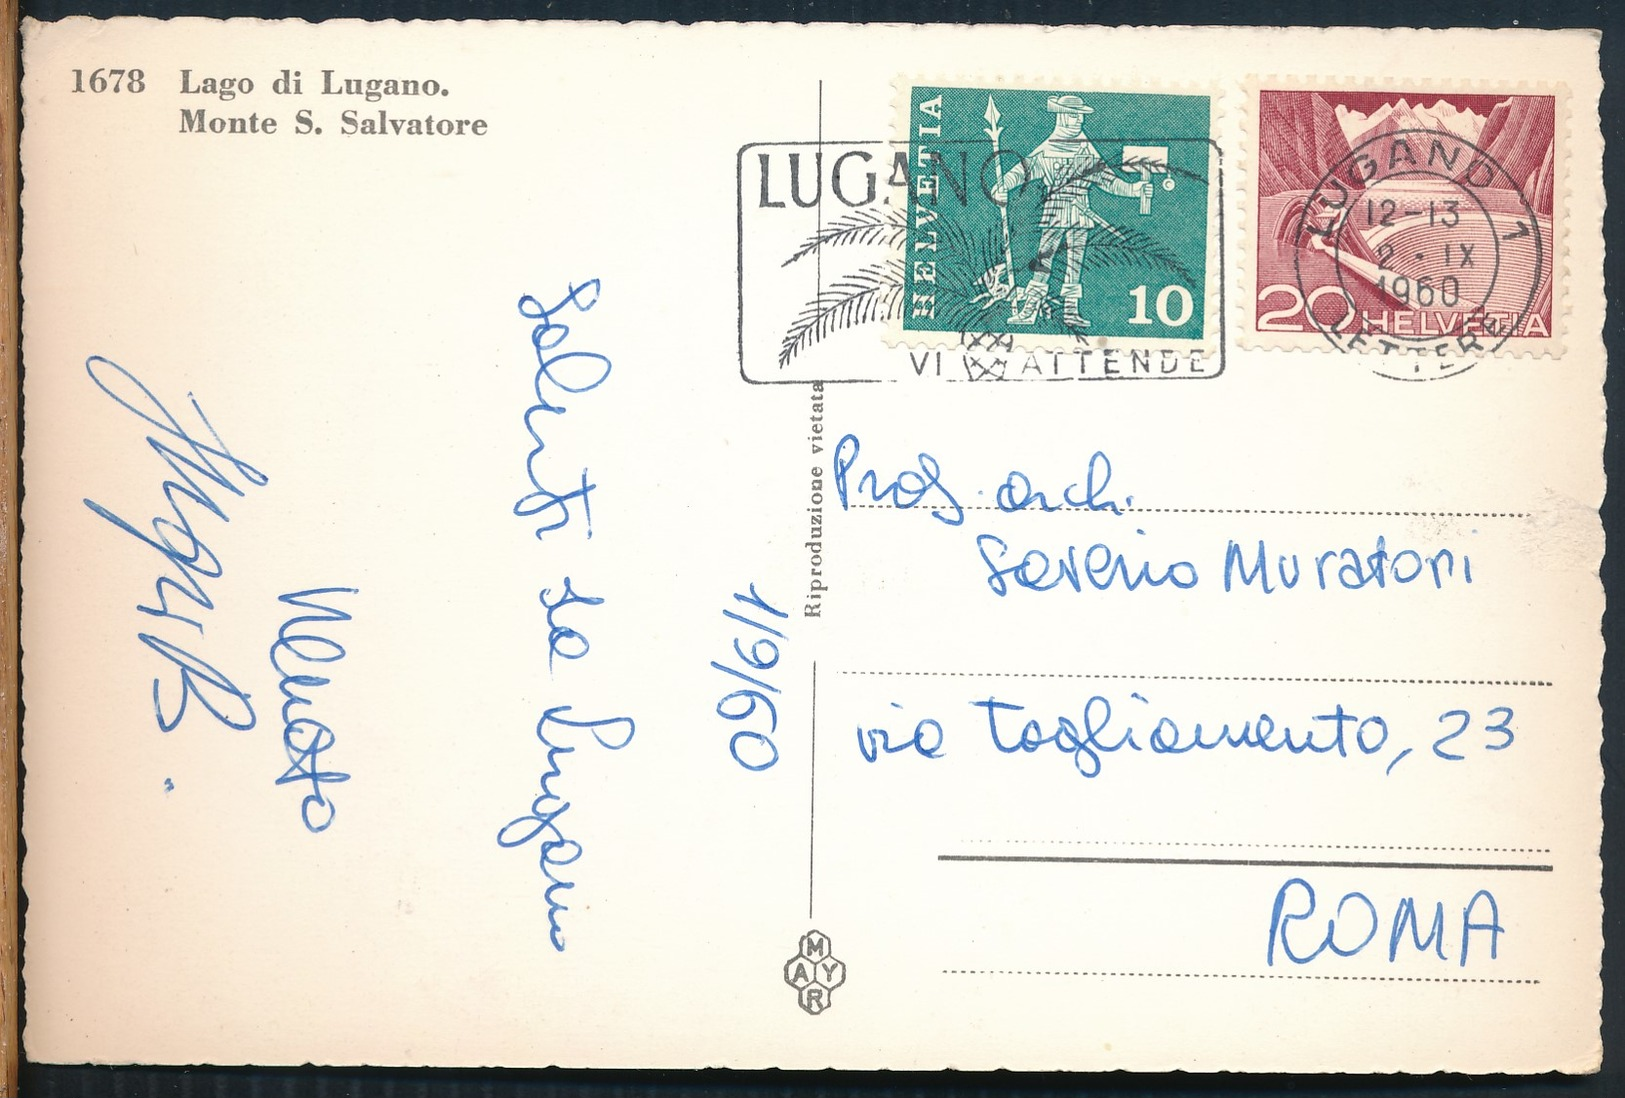 °°° 16327 - SVIZZERA - TI - LUGANO - MONTE S. SALVATORE - 1960 With Stamps °°° - Lugano